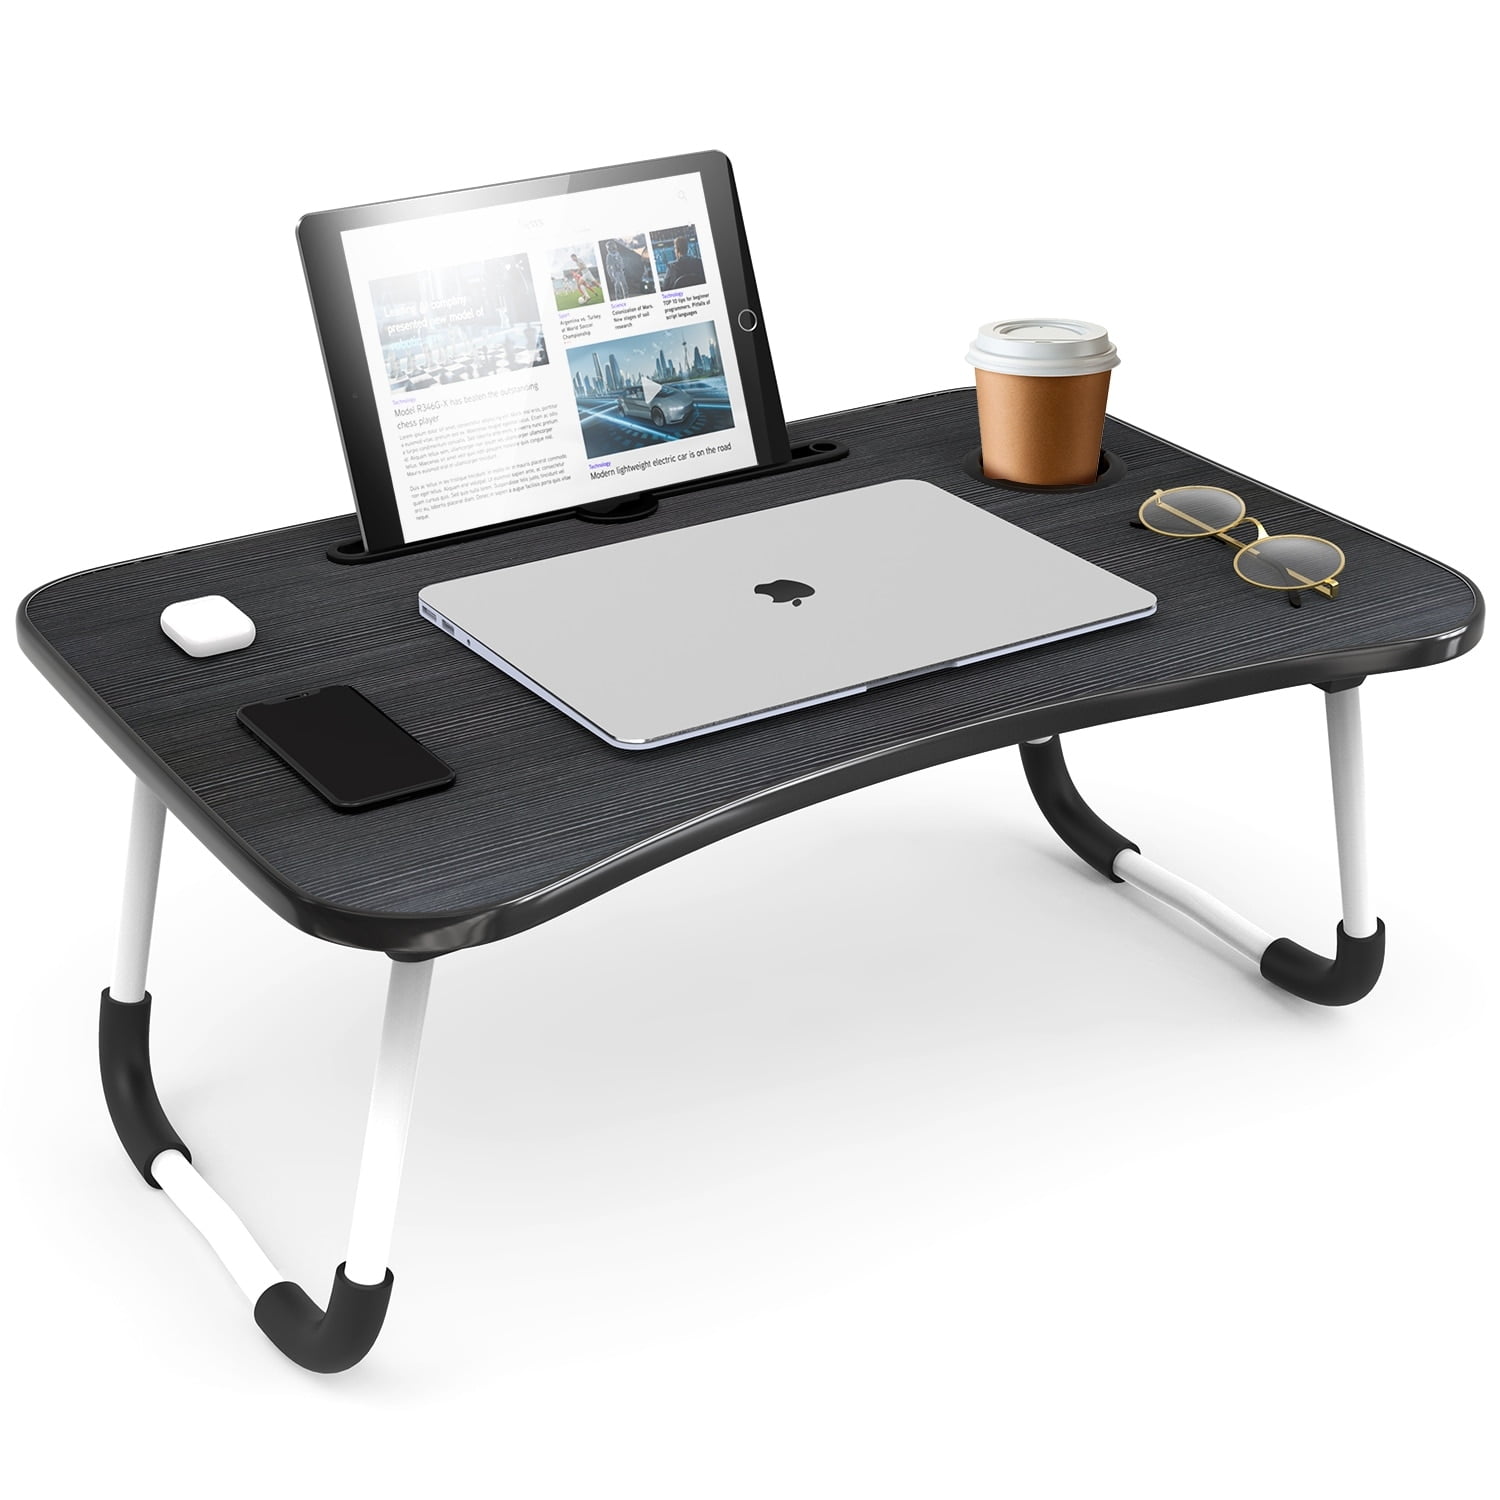 PHANCIR Foldable Lap Desk, 23.6 Inch Portable Wood Laptop Desk